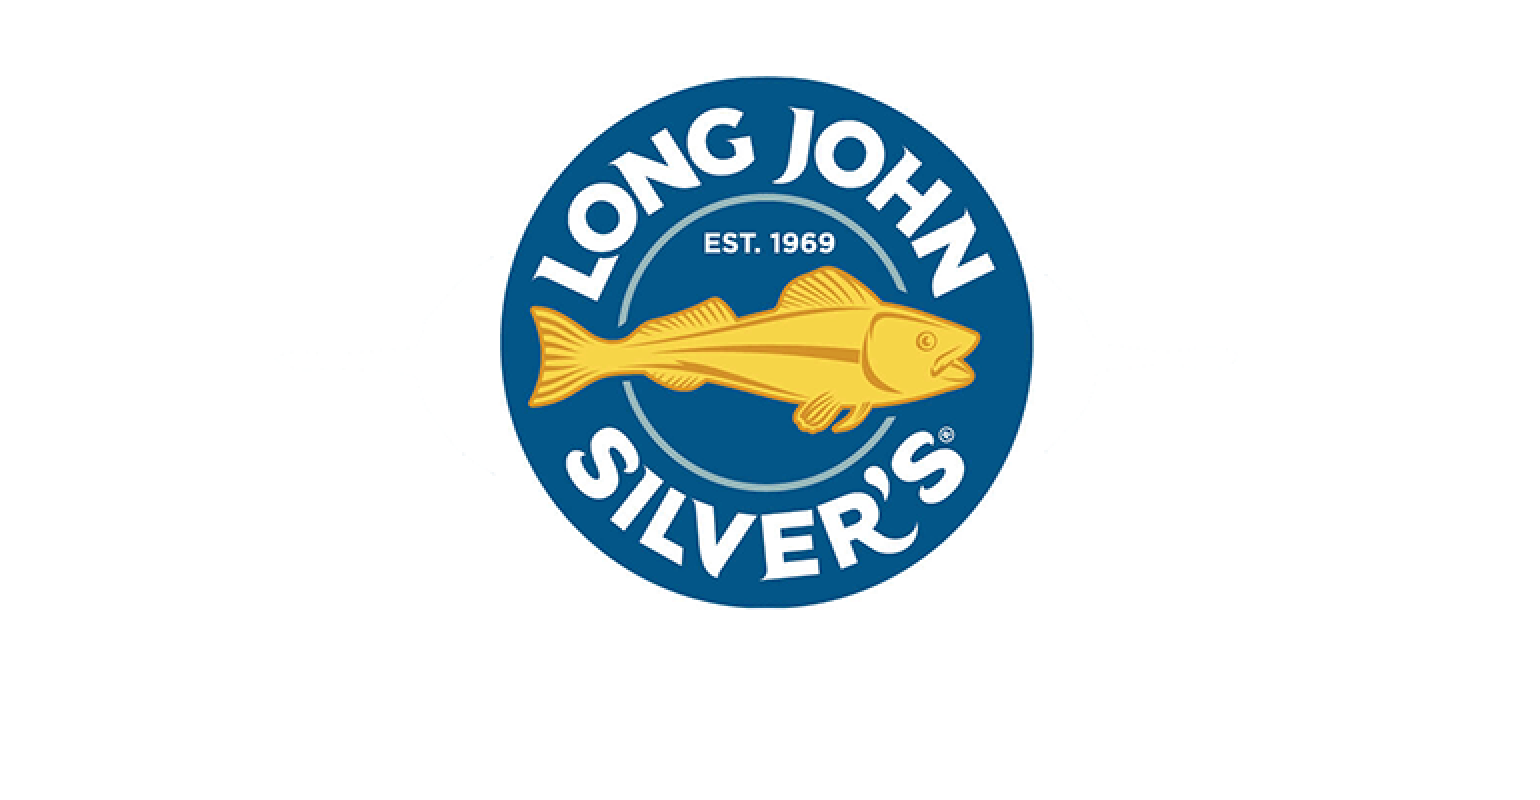 Long John Silver's sets sail on new seas